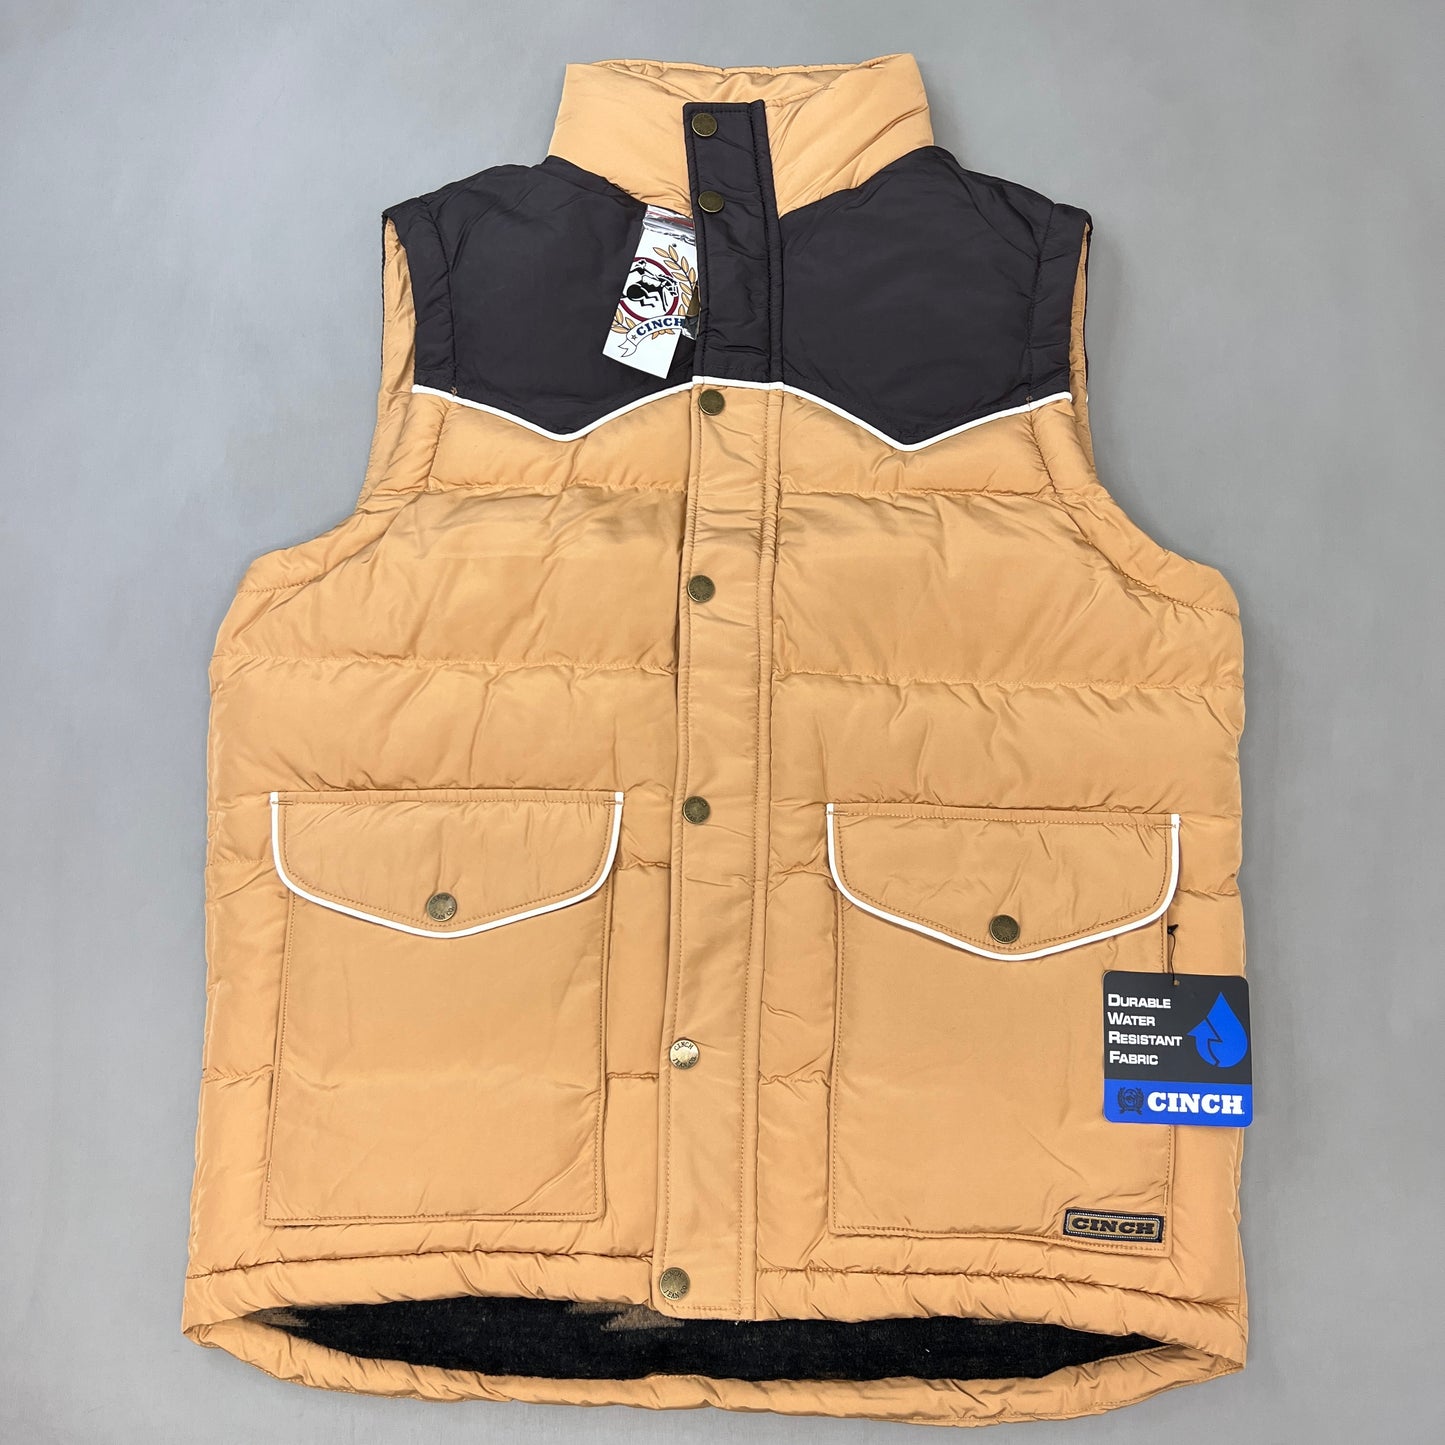 CINCH Quilted Vest Men's Sz S Gold/Brown MWV1578001 (New)